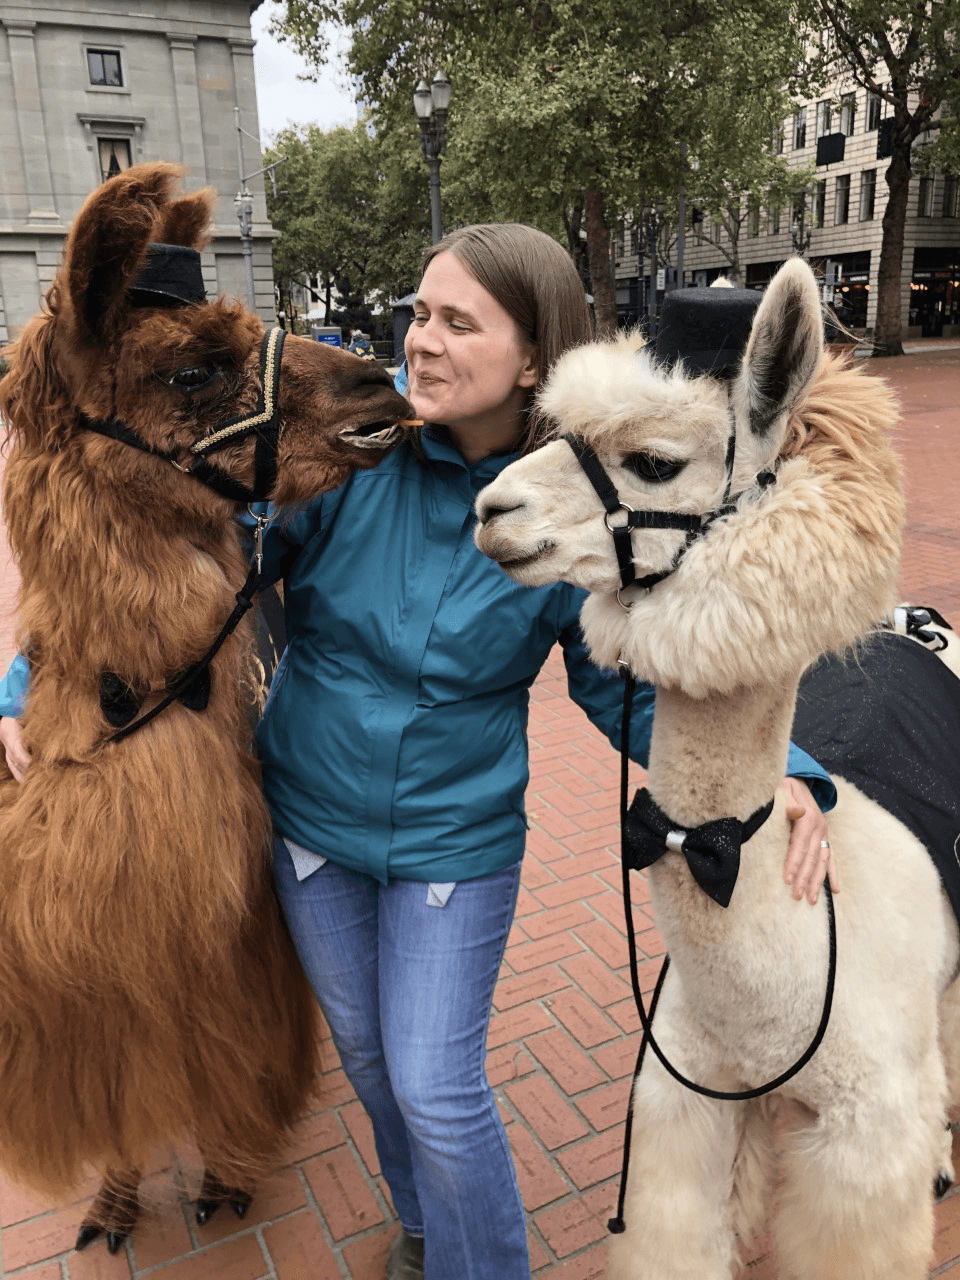 A woman smiles next to two llamas.